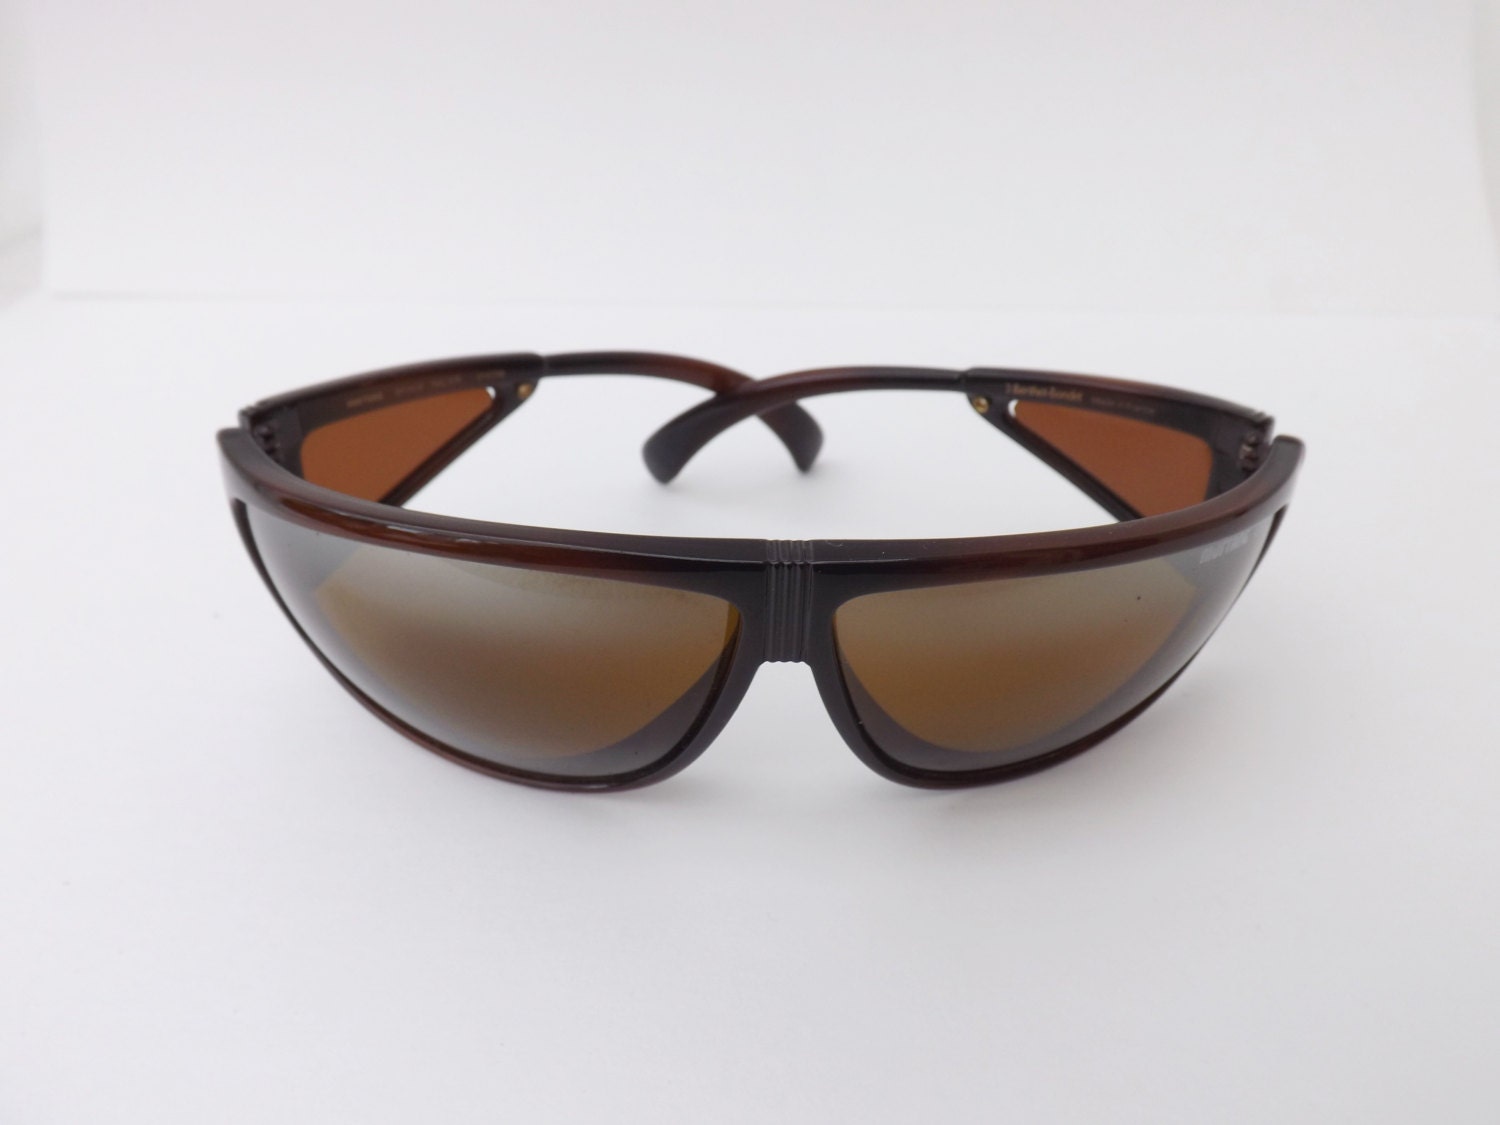 SALE Vintage Sunglasses UV 400 MUSTANG Berthet Bondet Made in